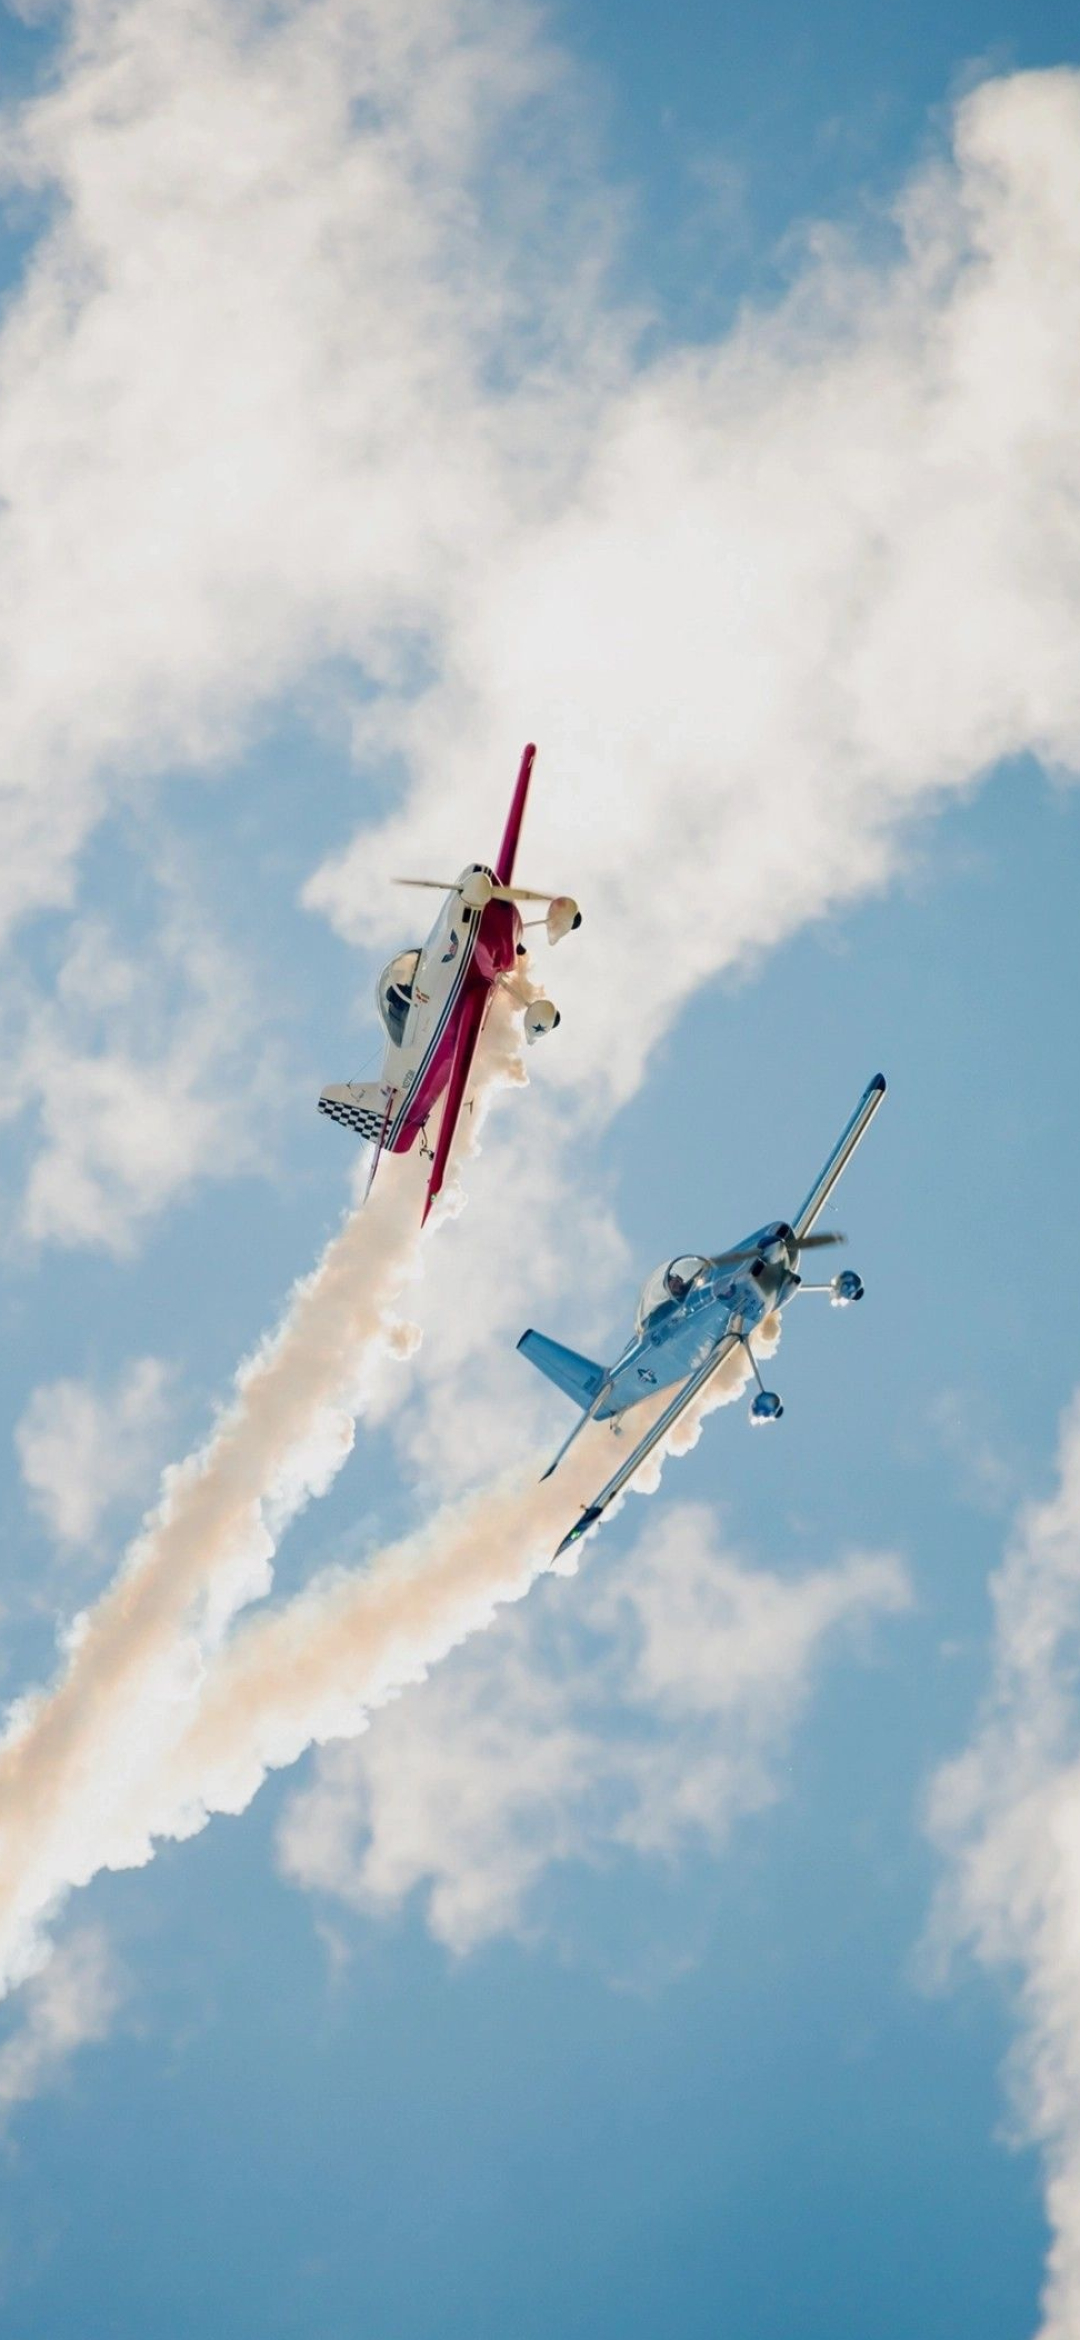 Aerobatics: Tandem aircraft air show, Extreme air sport, Extreme performance. 1080x2340 HD Wallpaper.